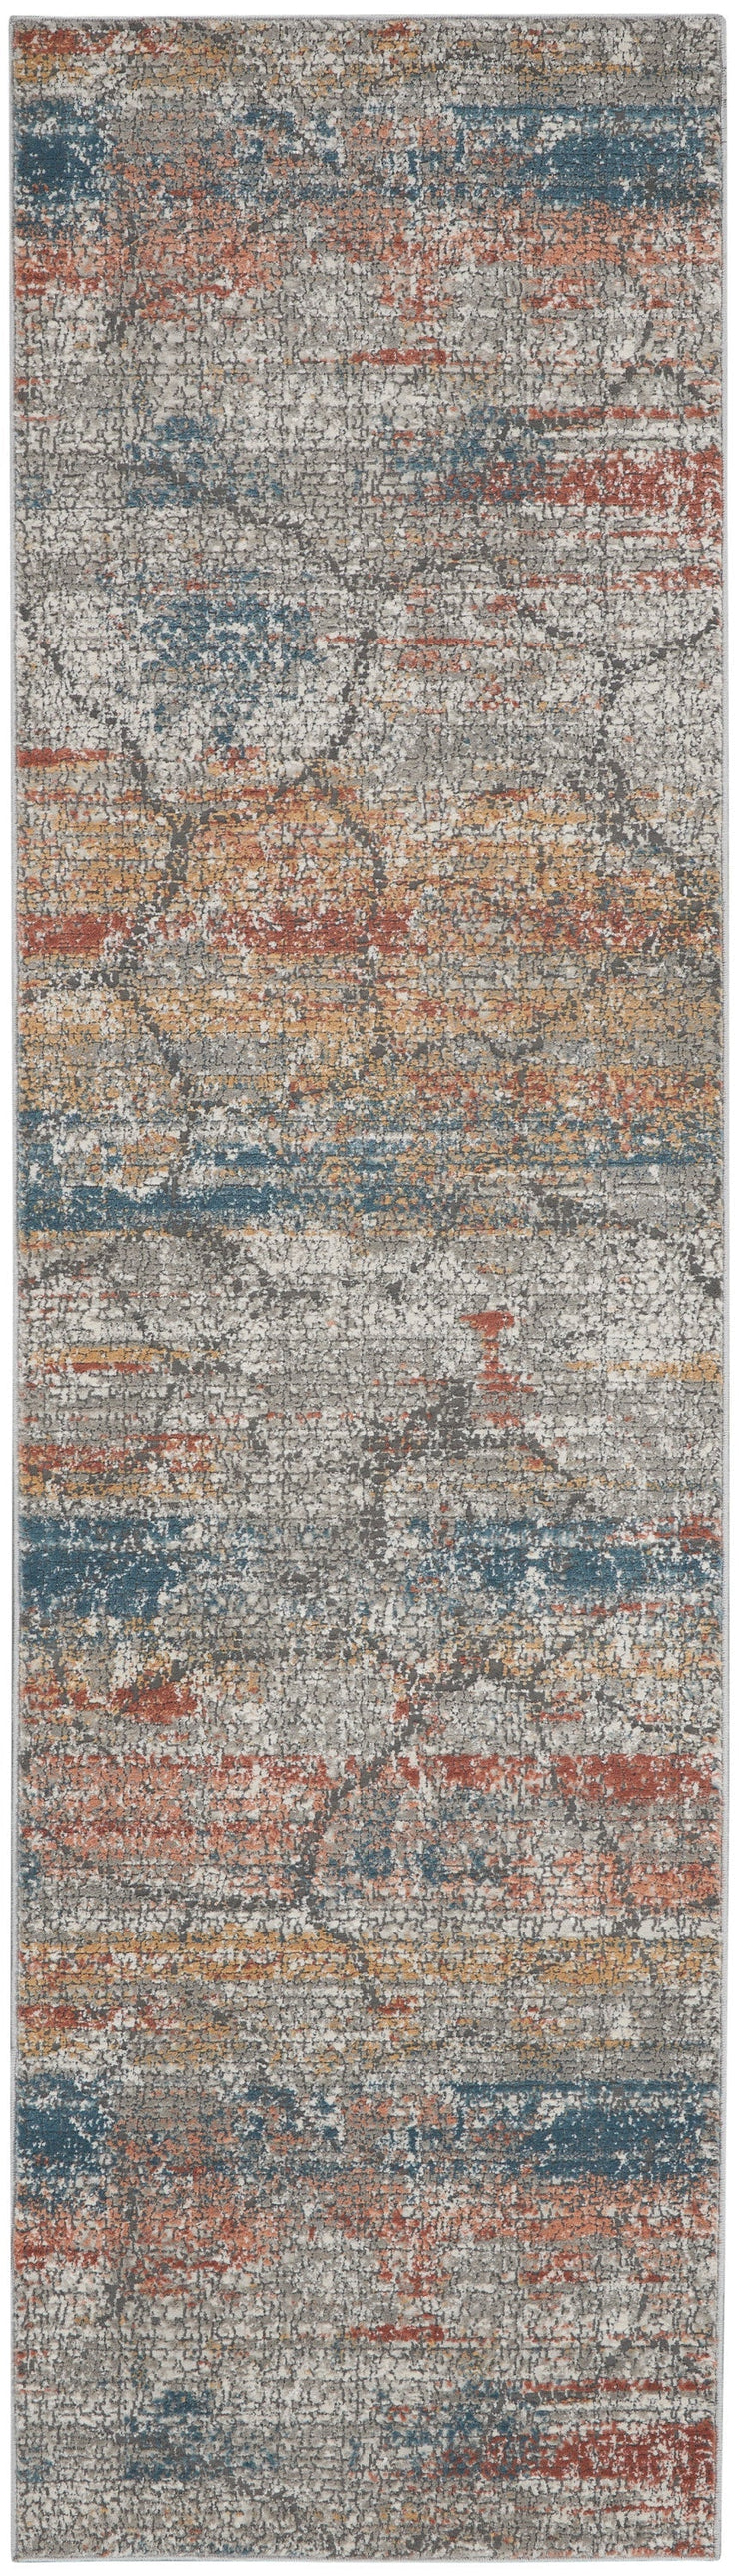 rustic textures multicolor rug by nourison 99446799012 redo 3